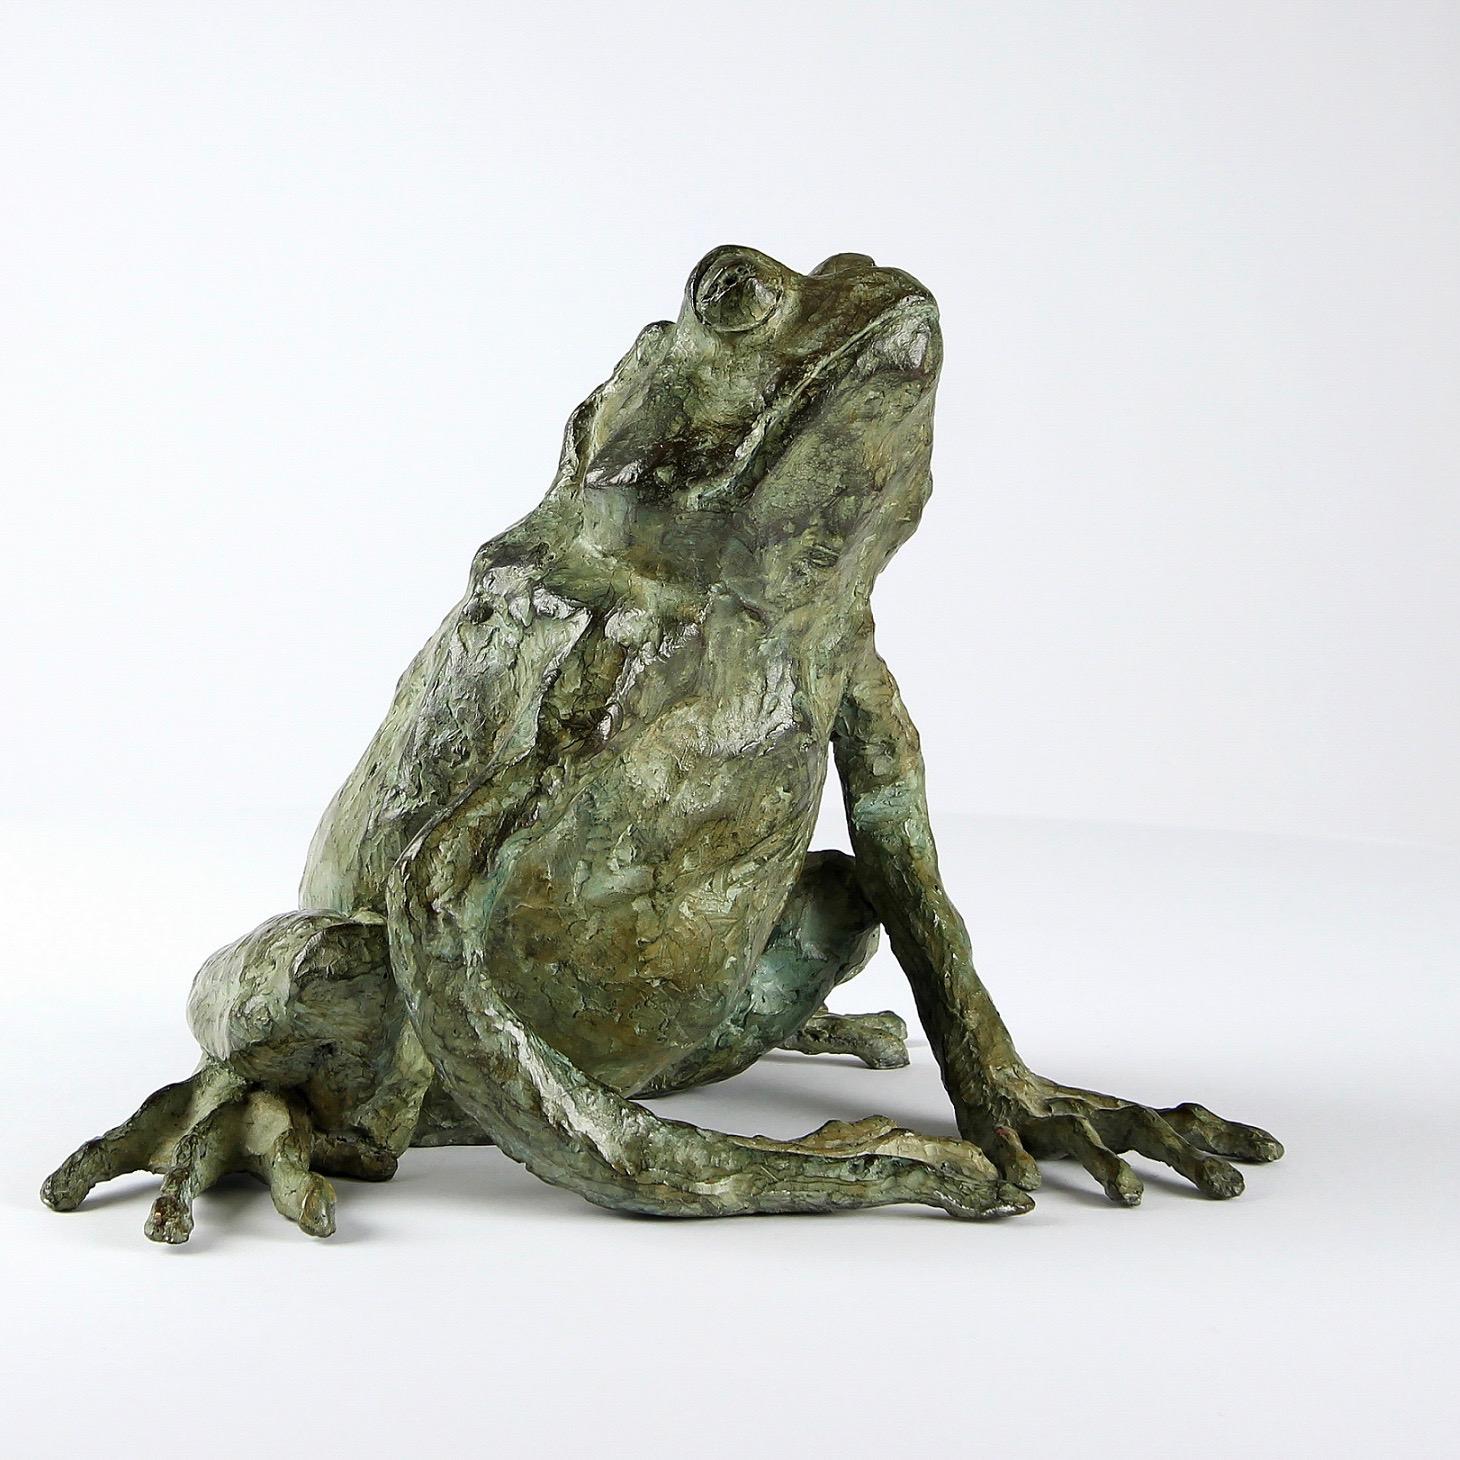 Magic Frog by Chésade - bronze sculpture, animal art